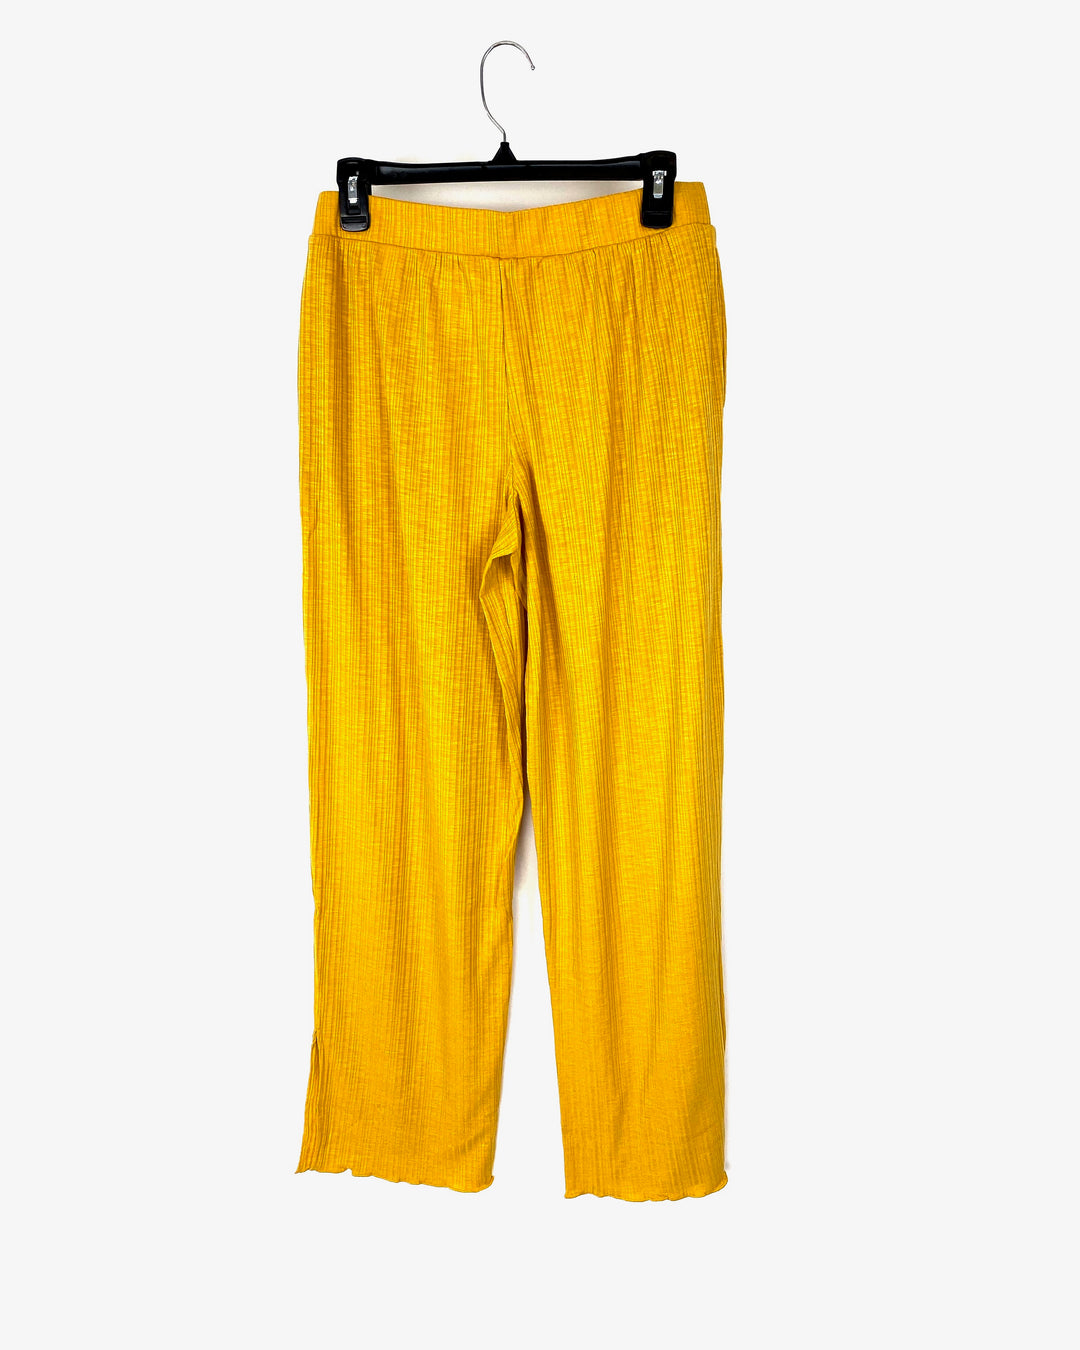 Flowy Yellow Ribbed Pants - Small, Medium